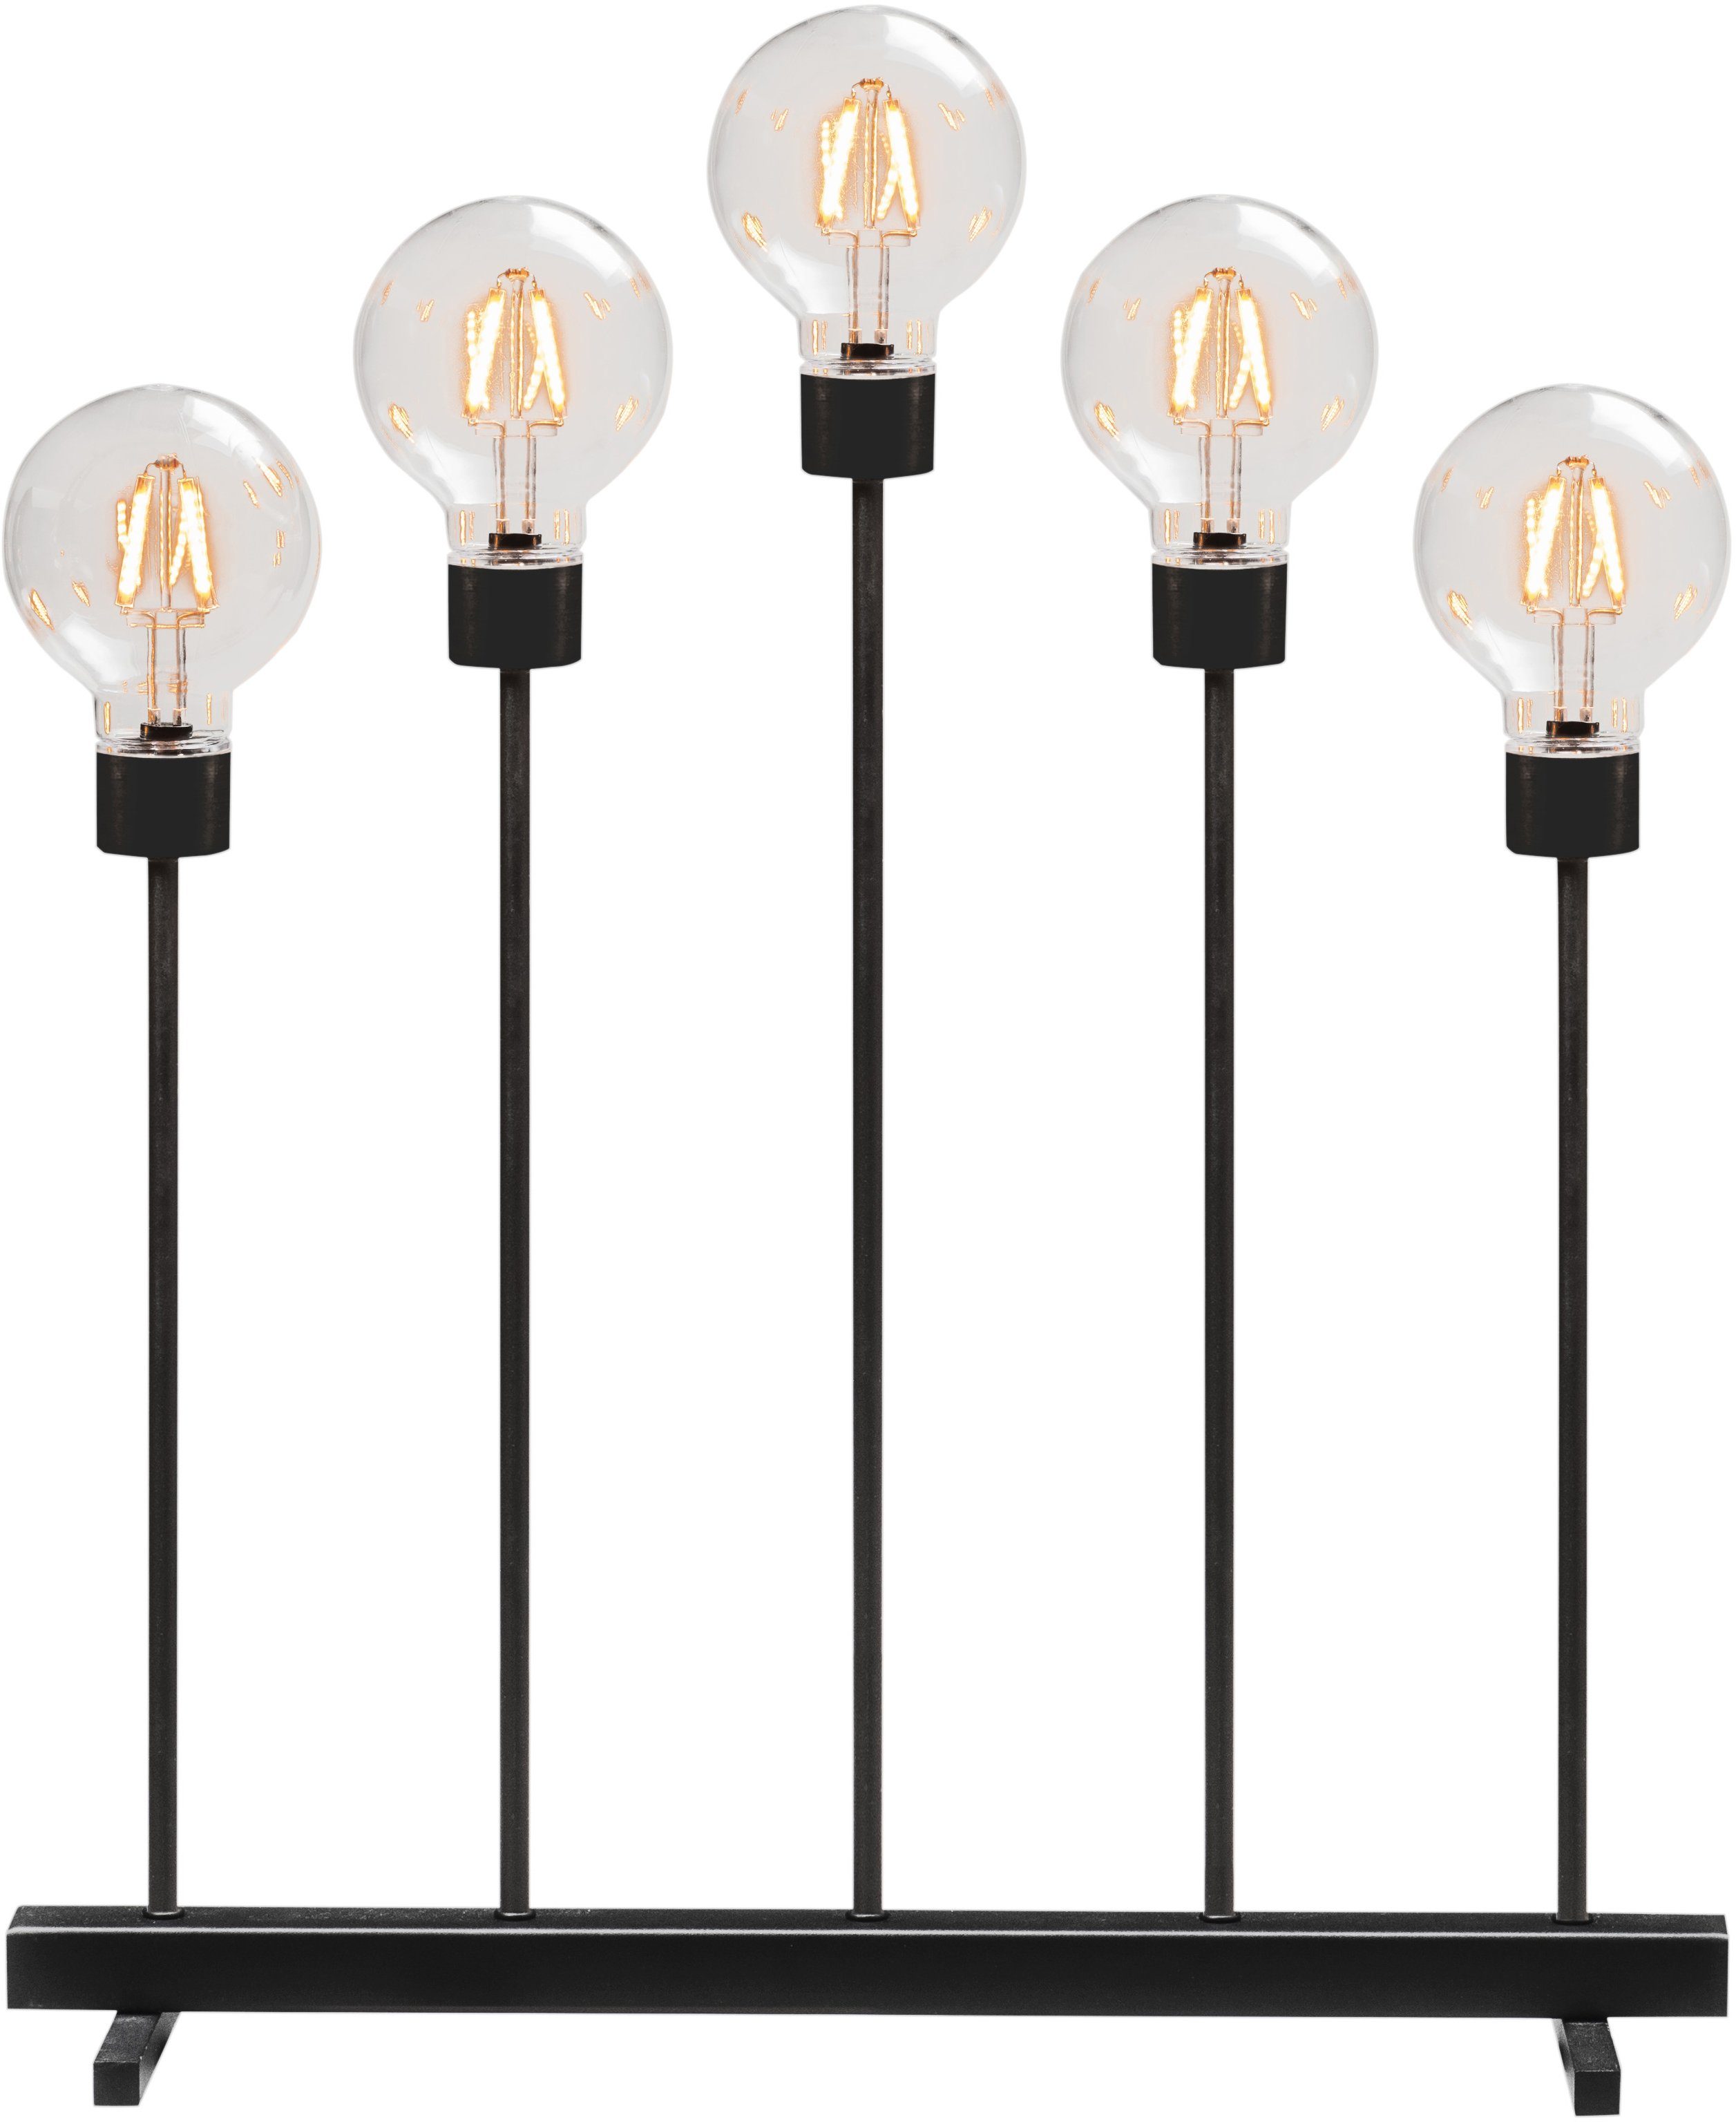 KONSTSMIDE LED fest bernsteinfb. LED 10 schwarz, LED Globes, runde Weihnachtsdeko, 5 Fensterleuchter Dioden integriert, Metallleuchter